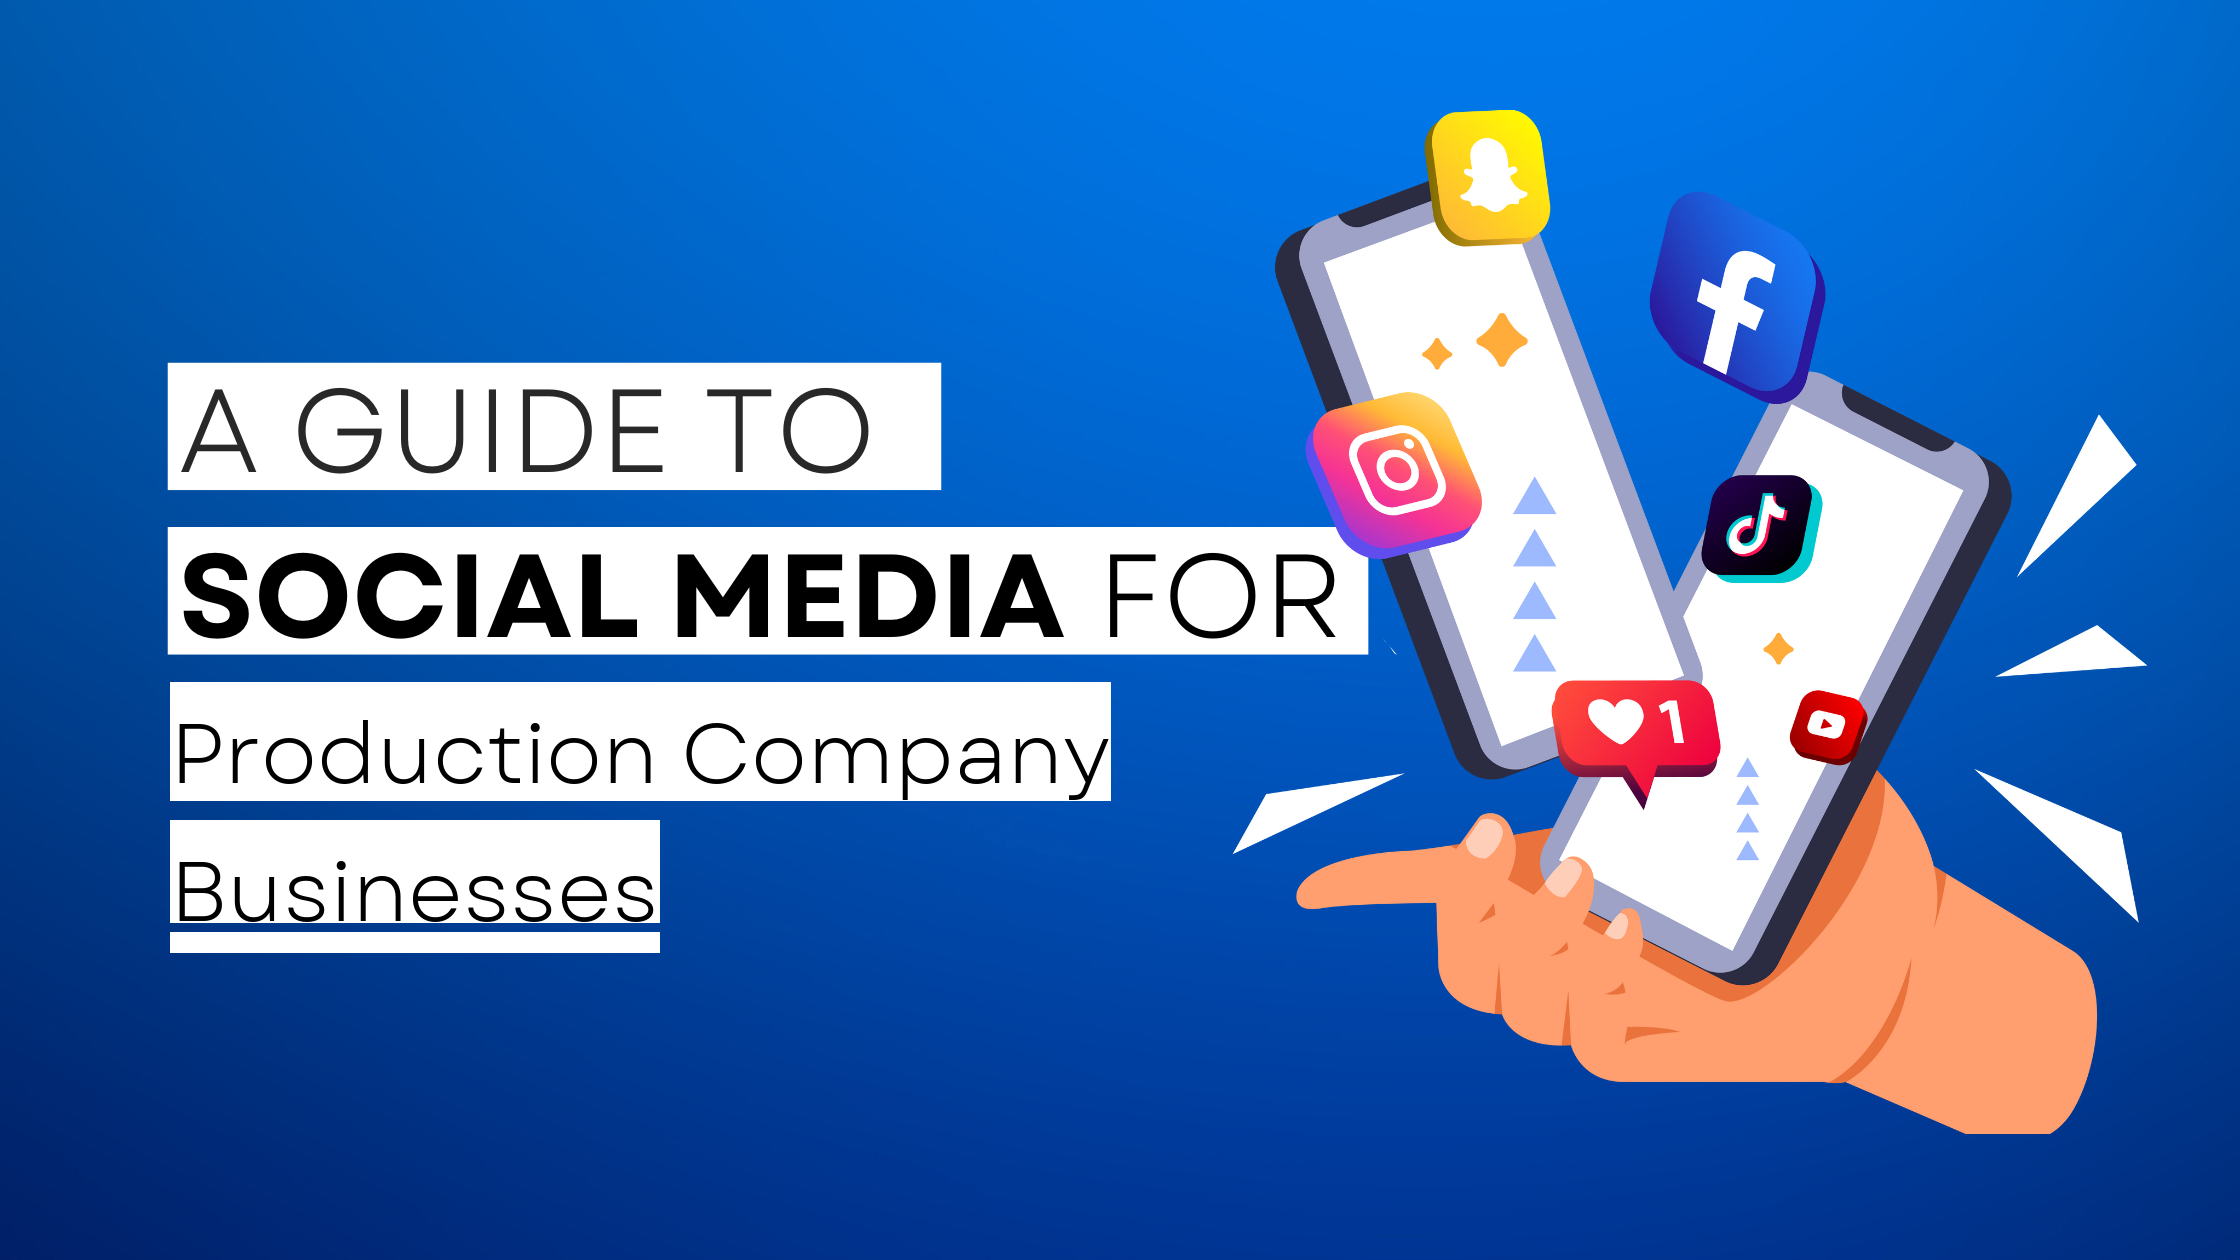 How to start Production Company on social media